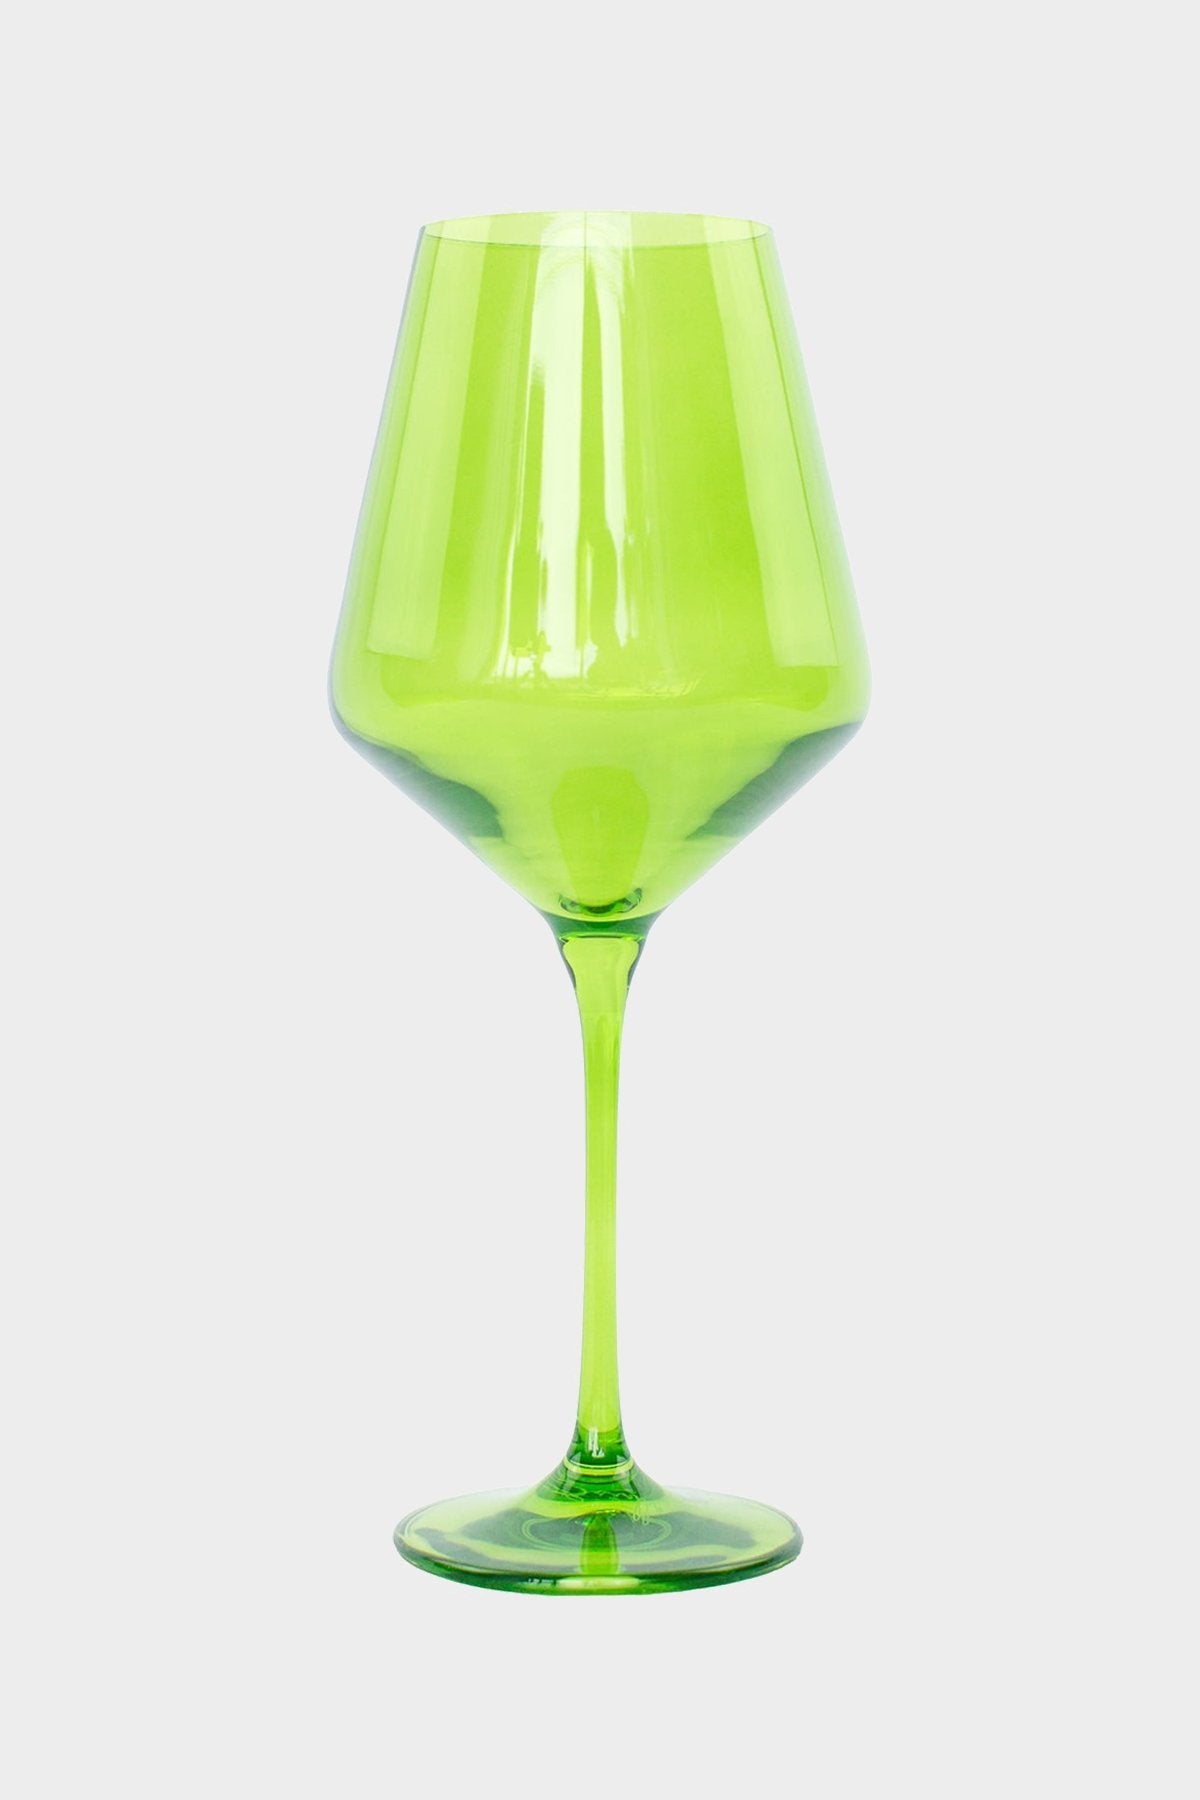 Wine Stemware Glass in Forest Green - Set of 6 - shop-olivia.com